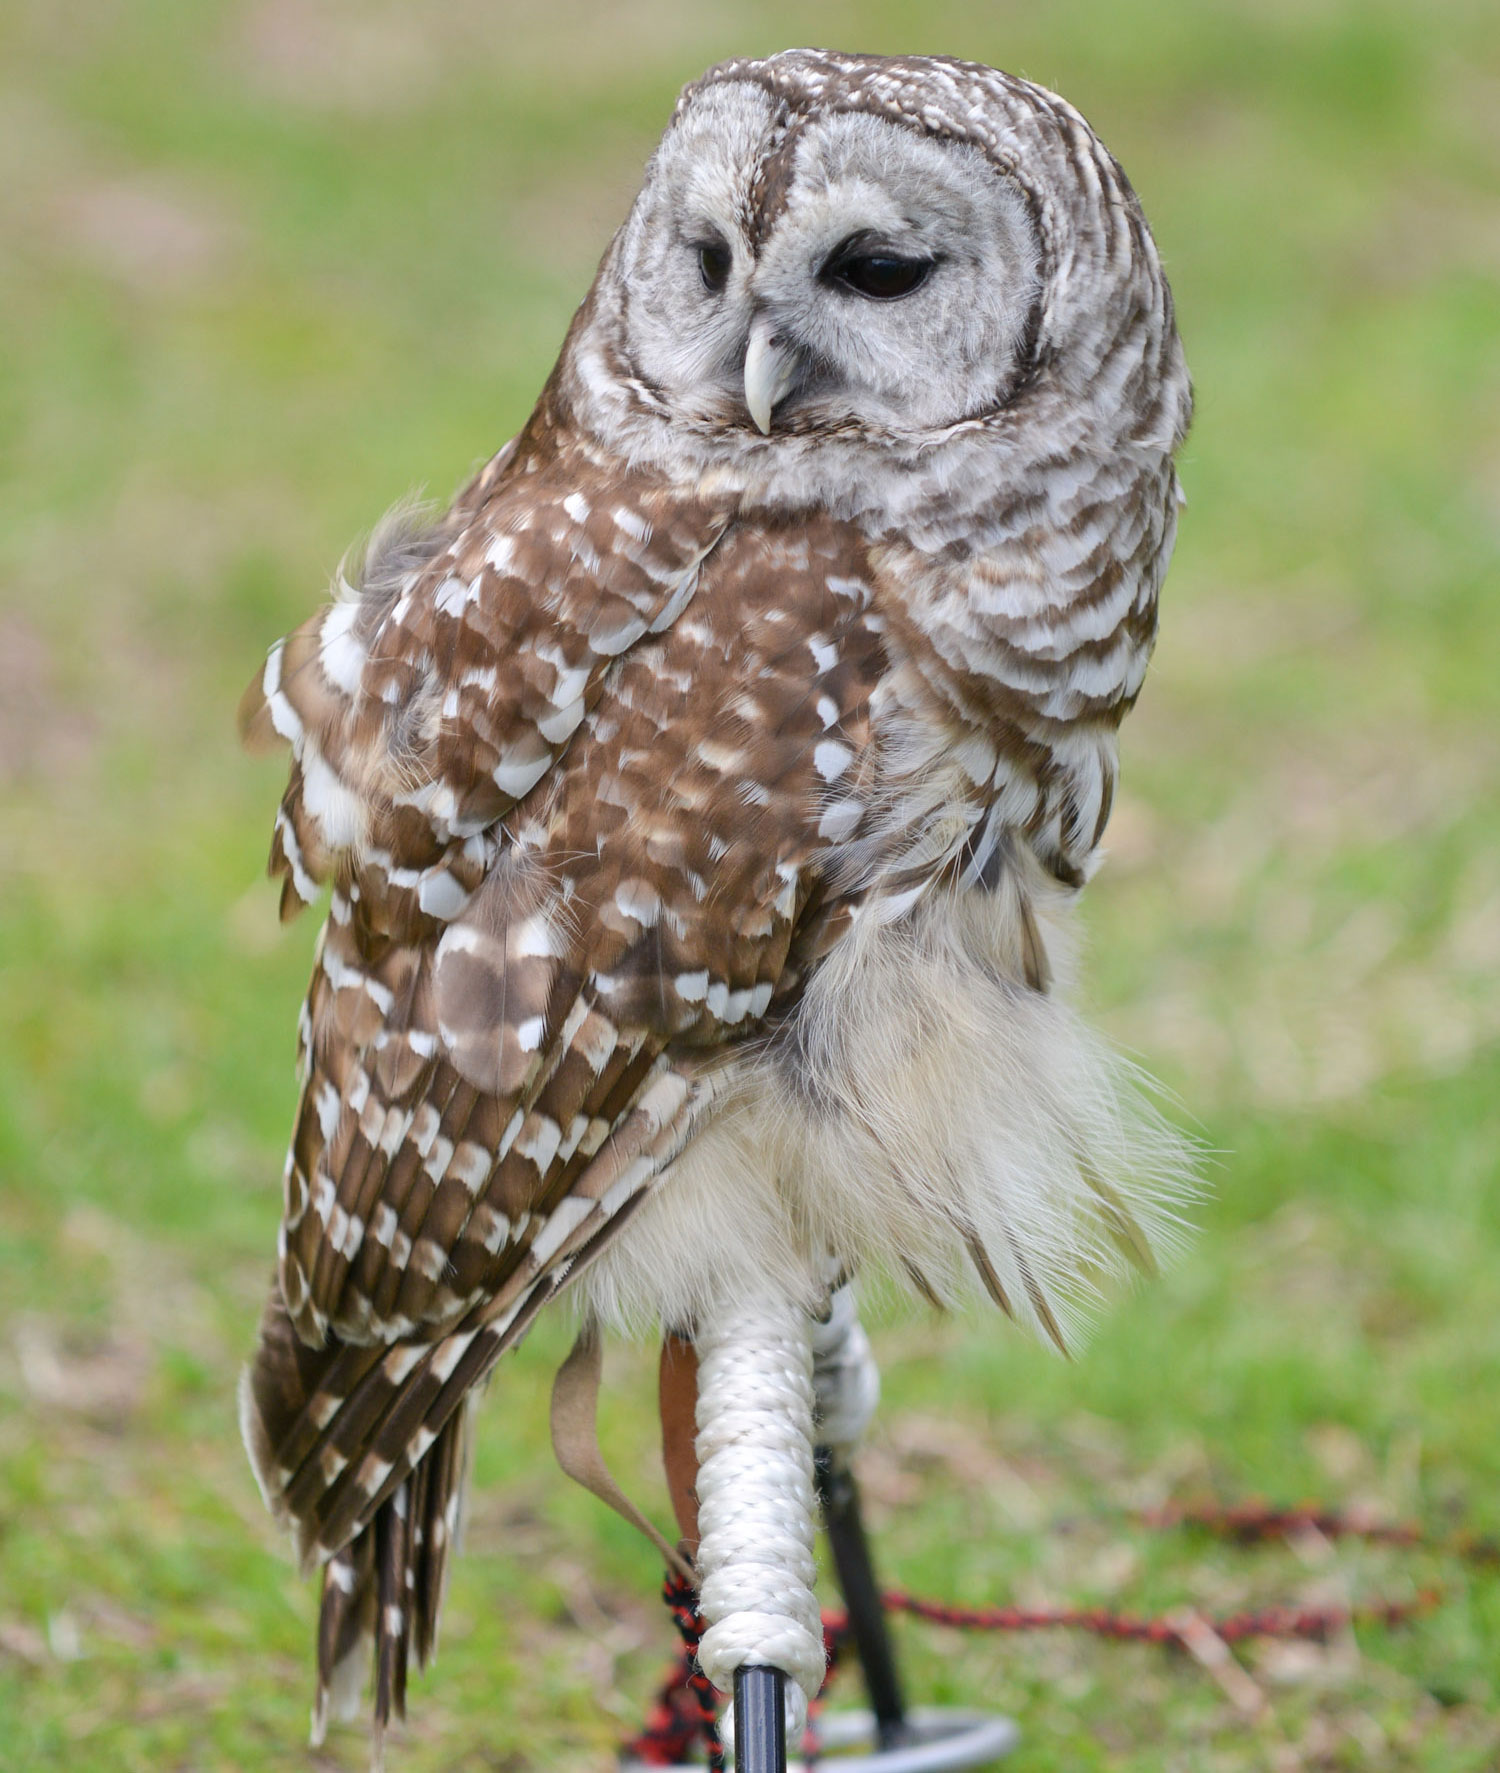 nyc owls barred owl lg